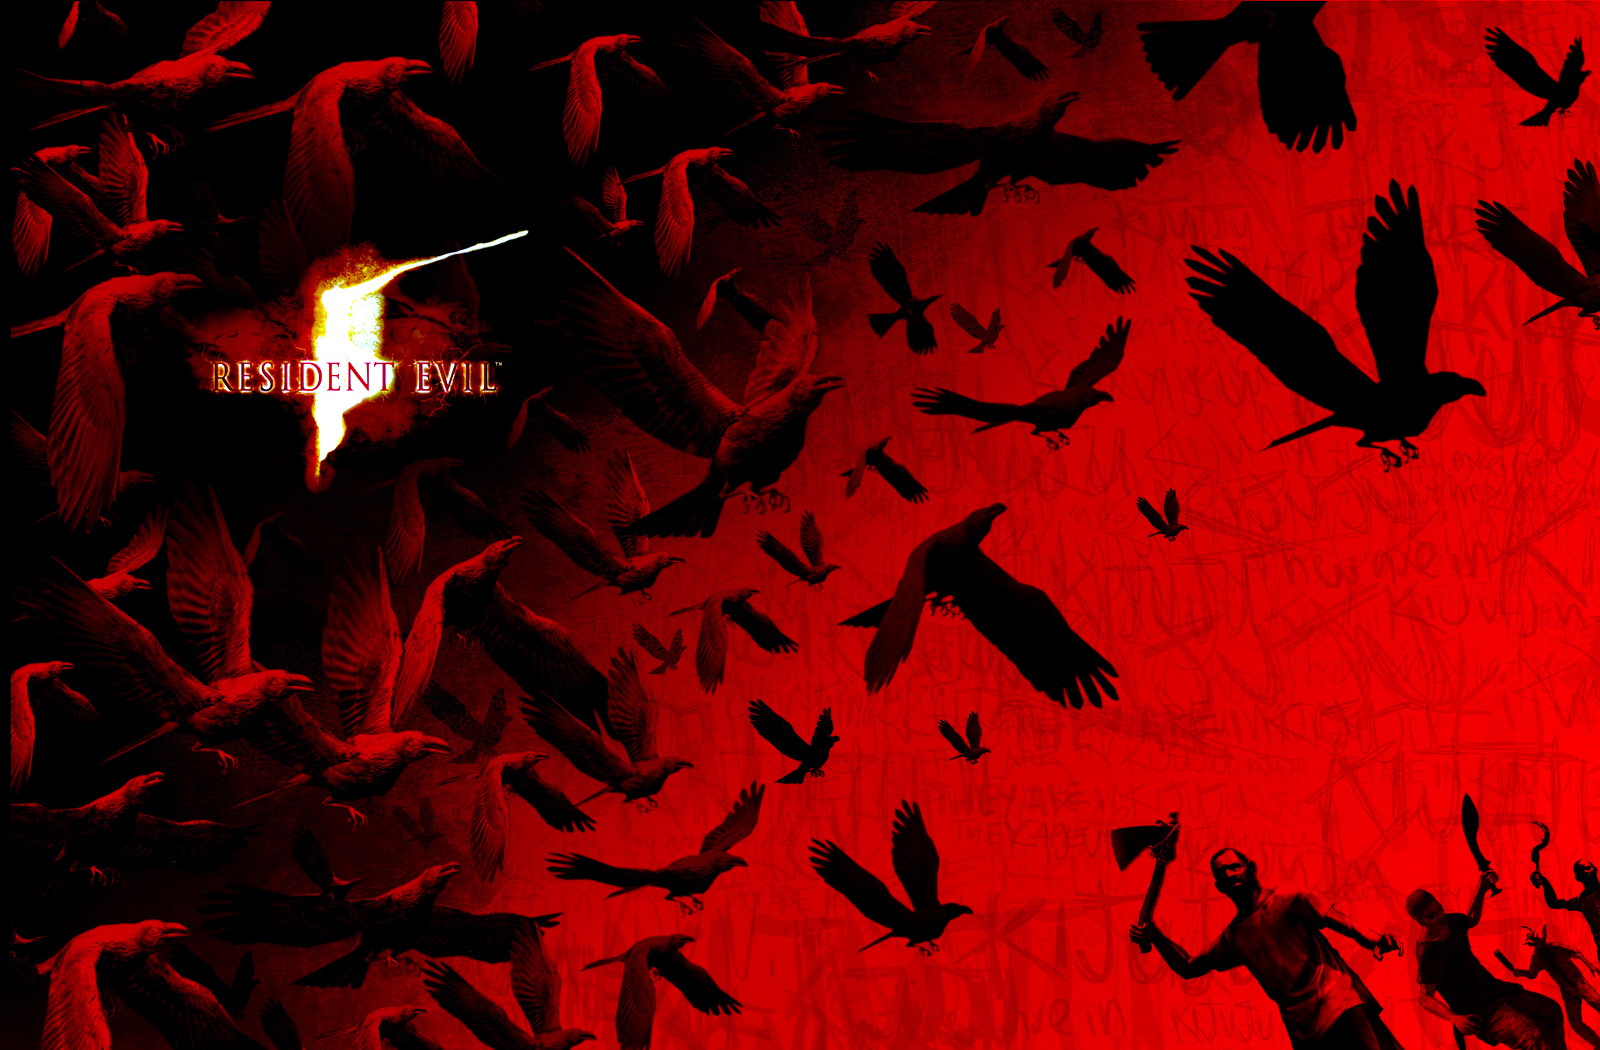 Wallpaper image of Resident Evil 5 PC Game